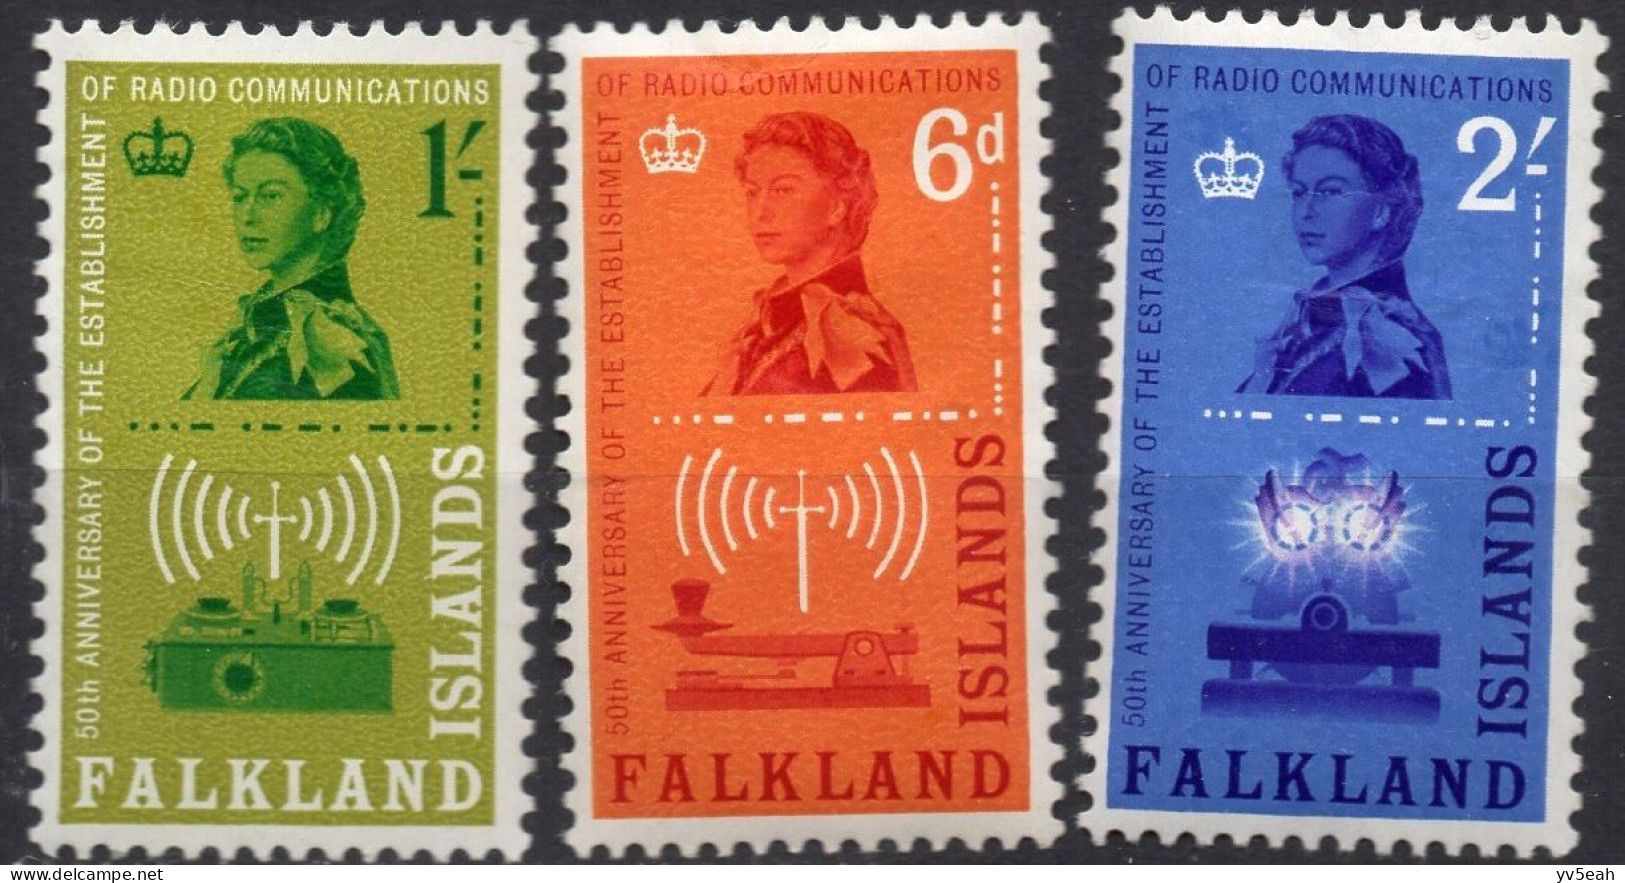 FALKLAND ISLANDS/1962/MH/SC#143-5/RADIO STATION/ QEII/ CODE MORSE / RADIO COMUNICATIONS/ FULL SET - Maldives (...-1965)